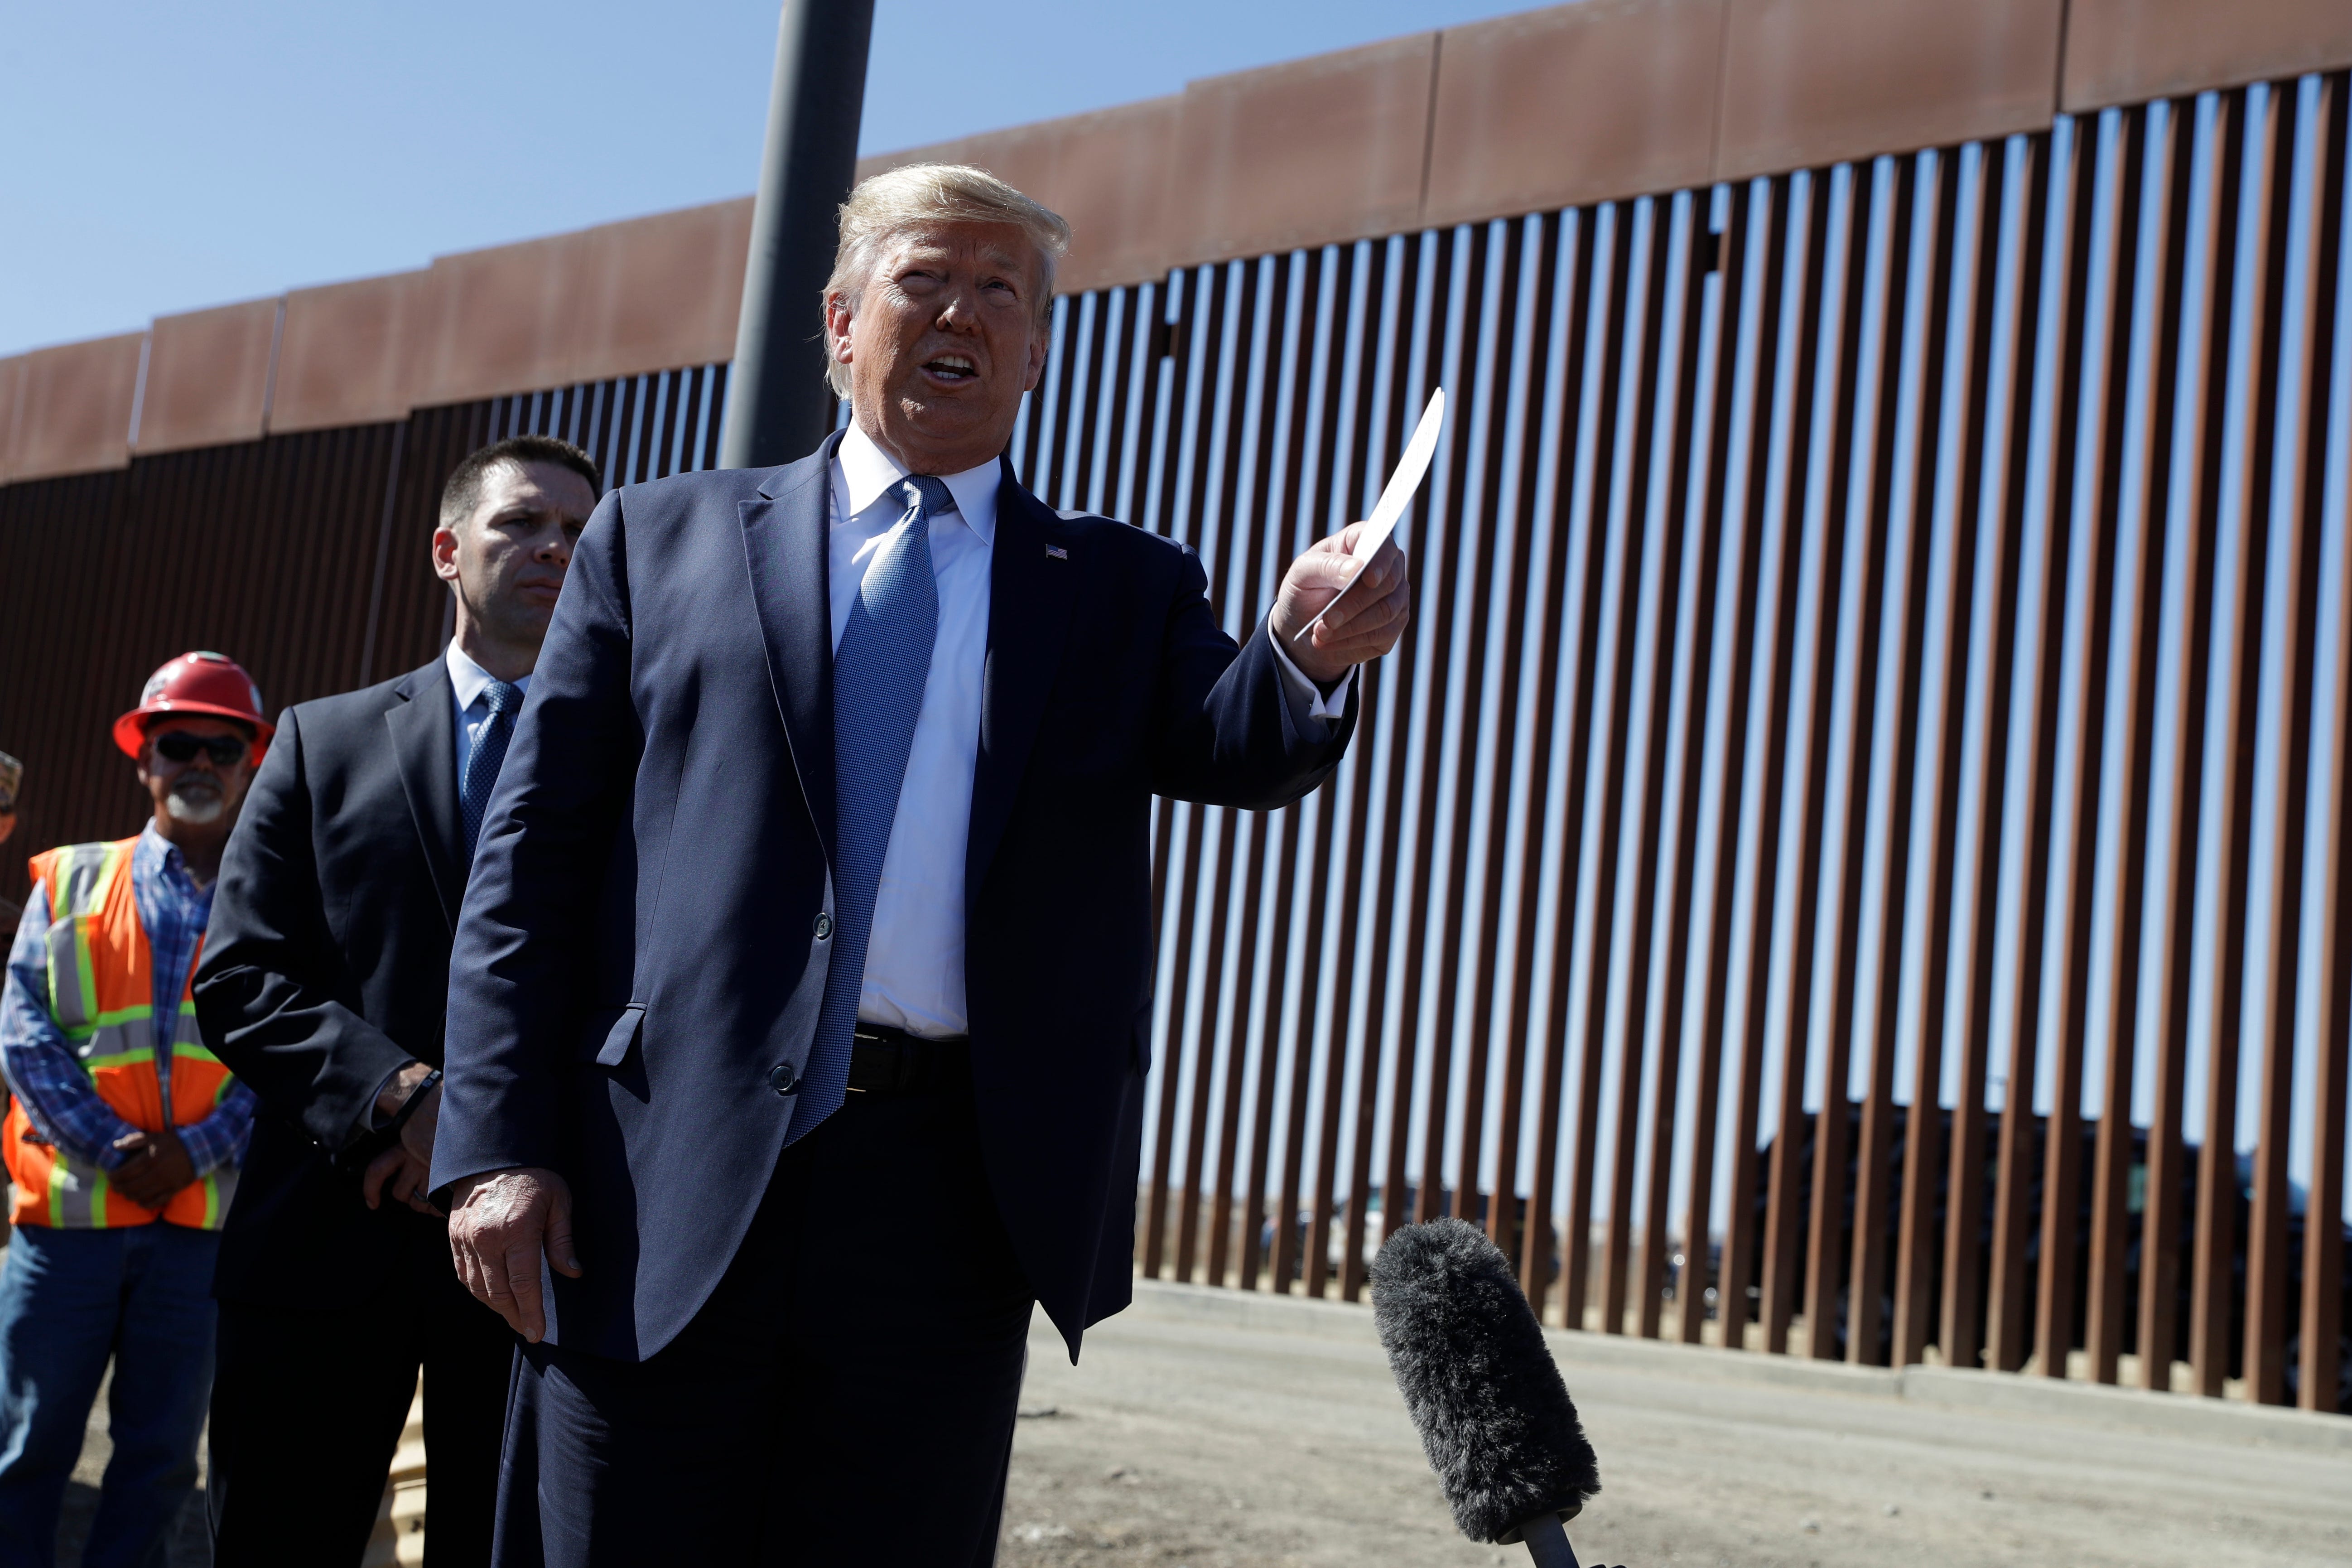 Fact check: Donald Trump has built more border wall than meme claims